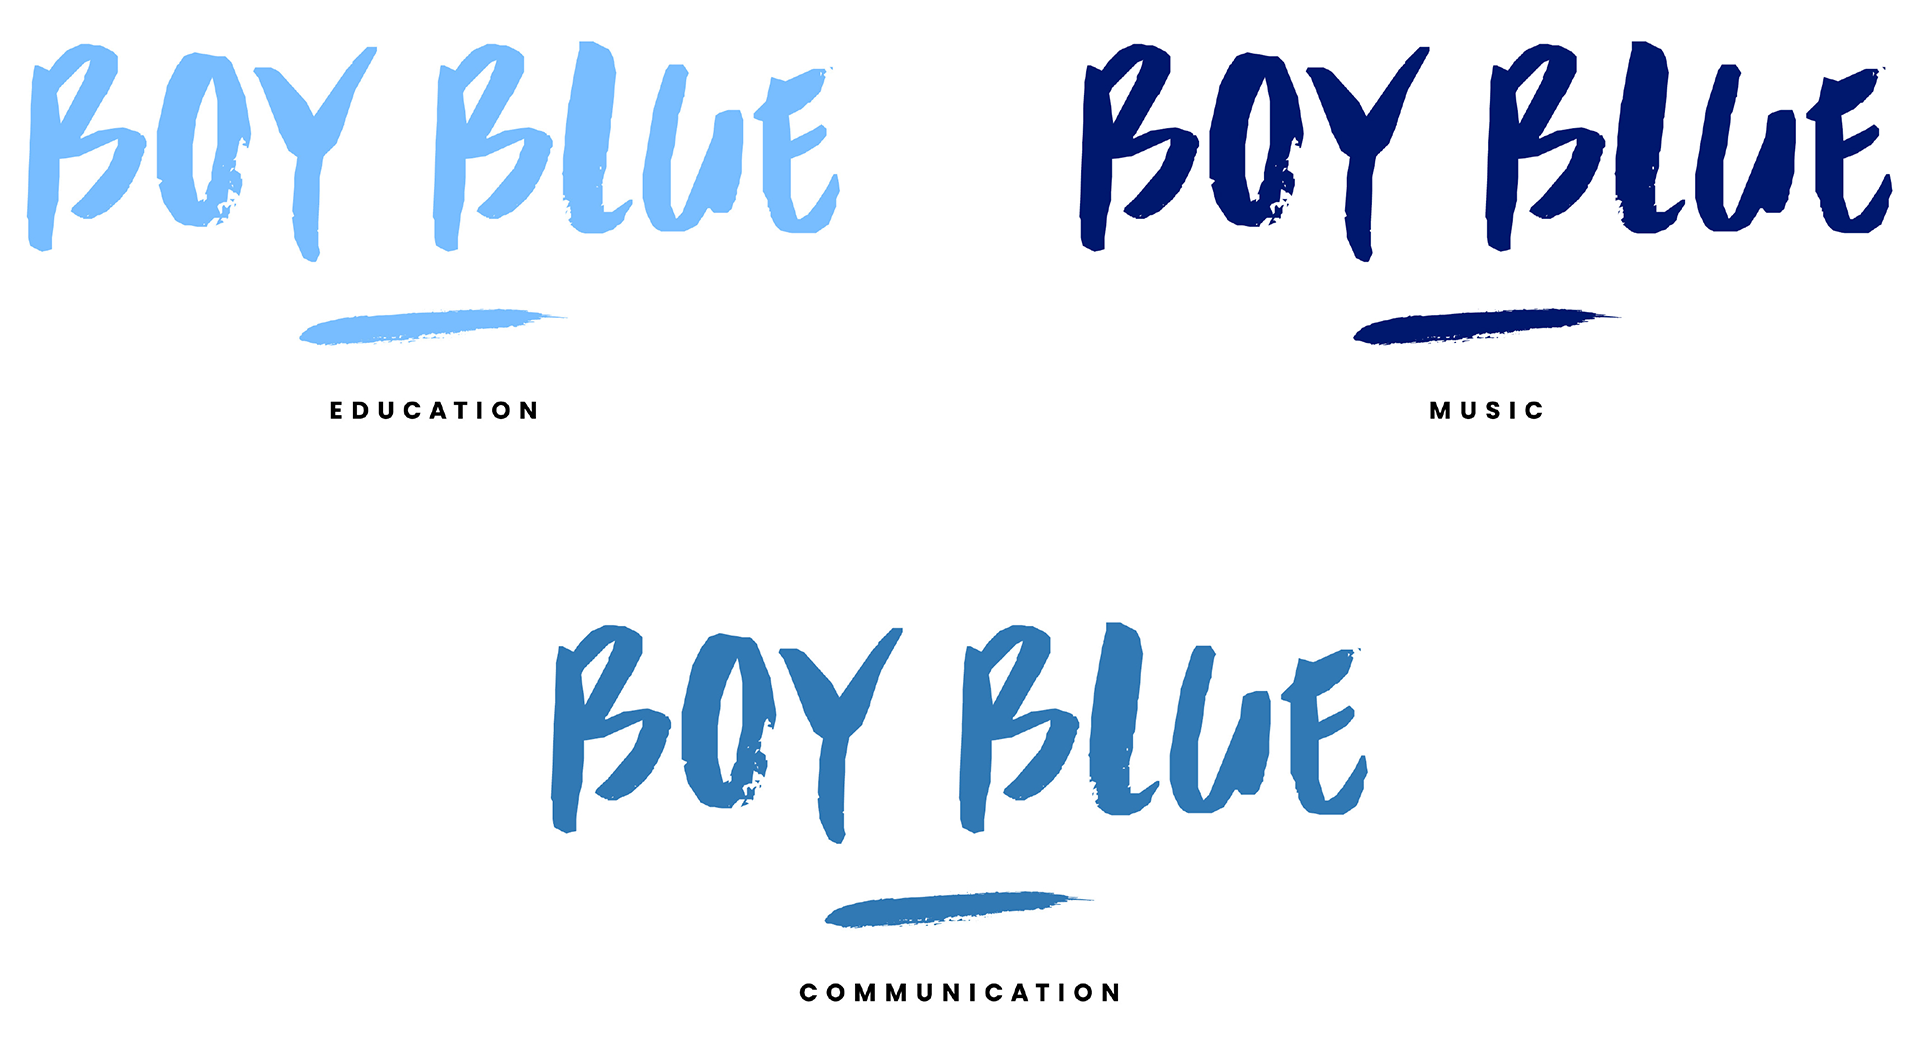 Boy Blue Entertainment - branding by Irish Butcher